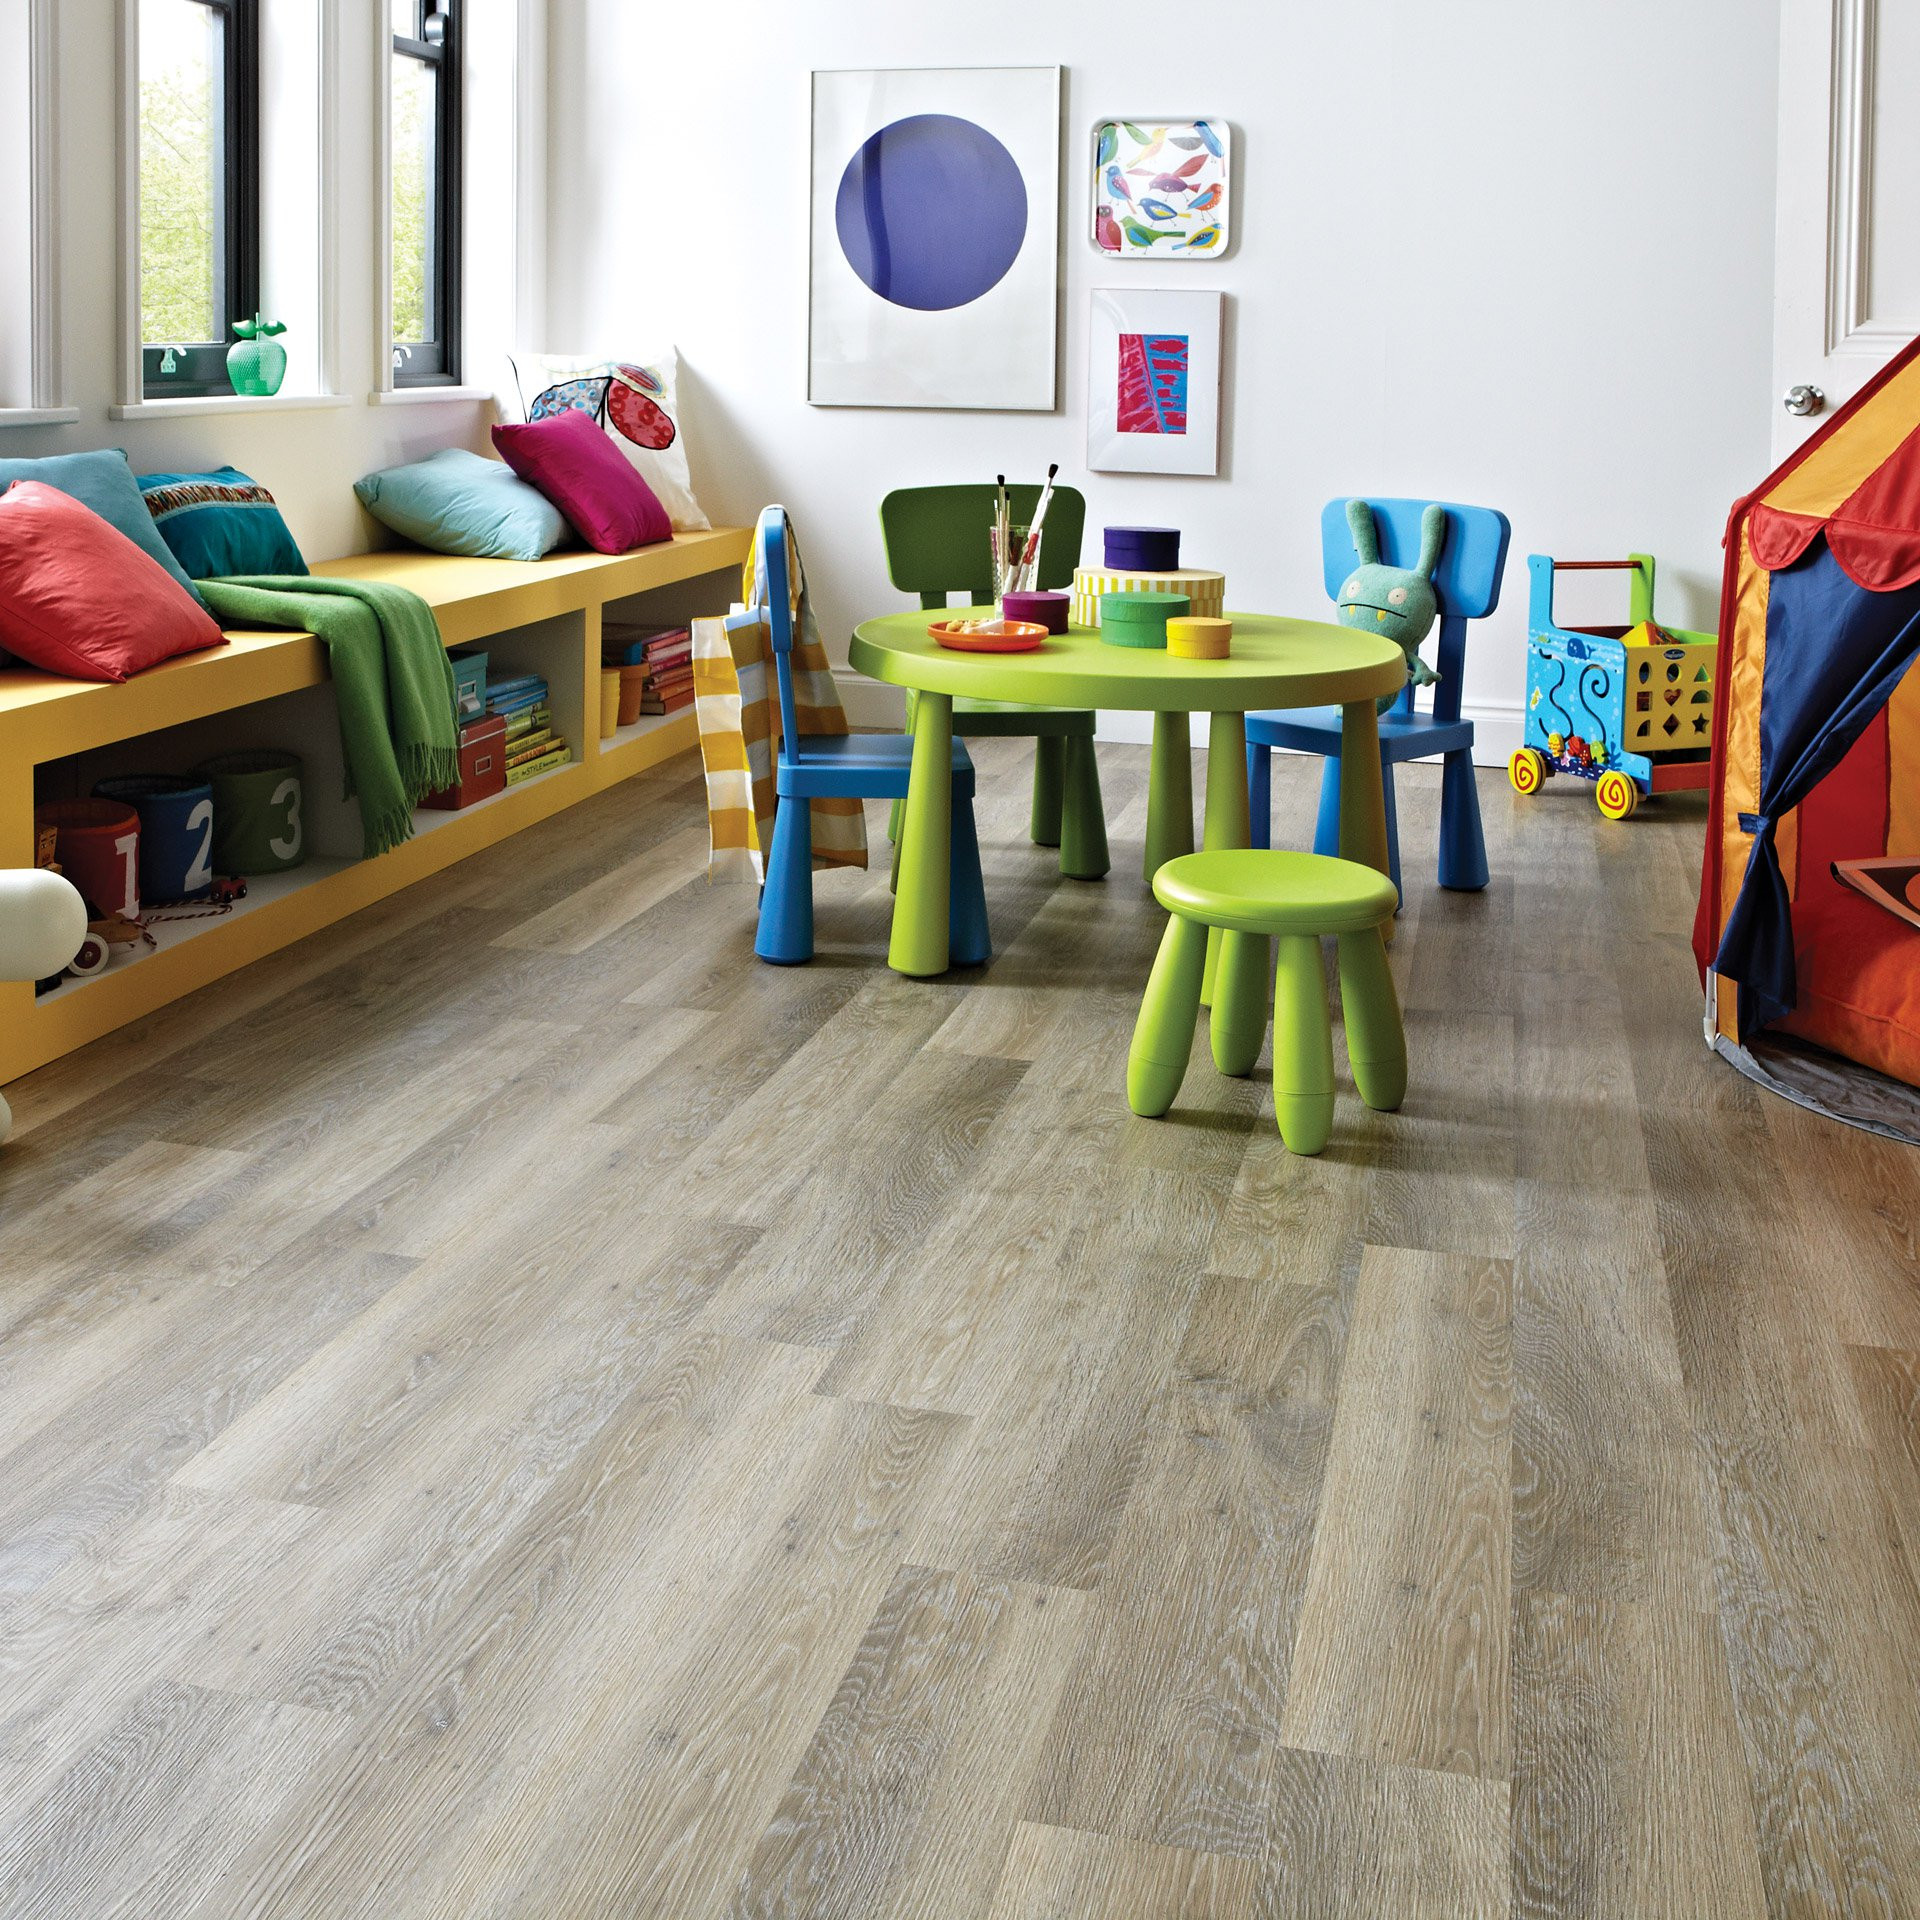 Floor For Kids Room
 Kids Room Flooring Ideas for Your Home